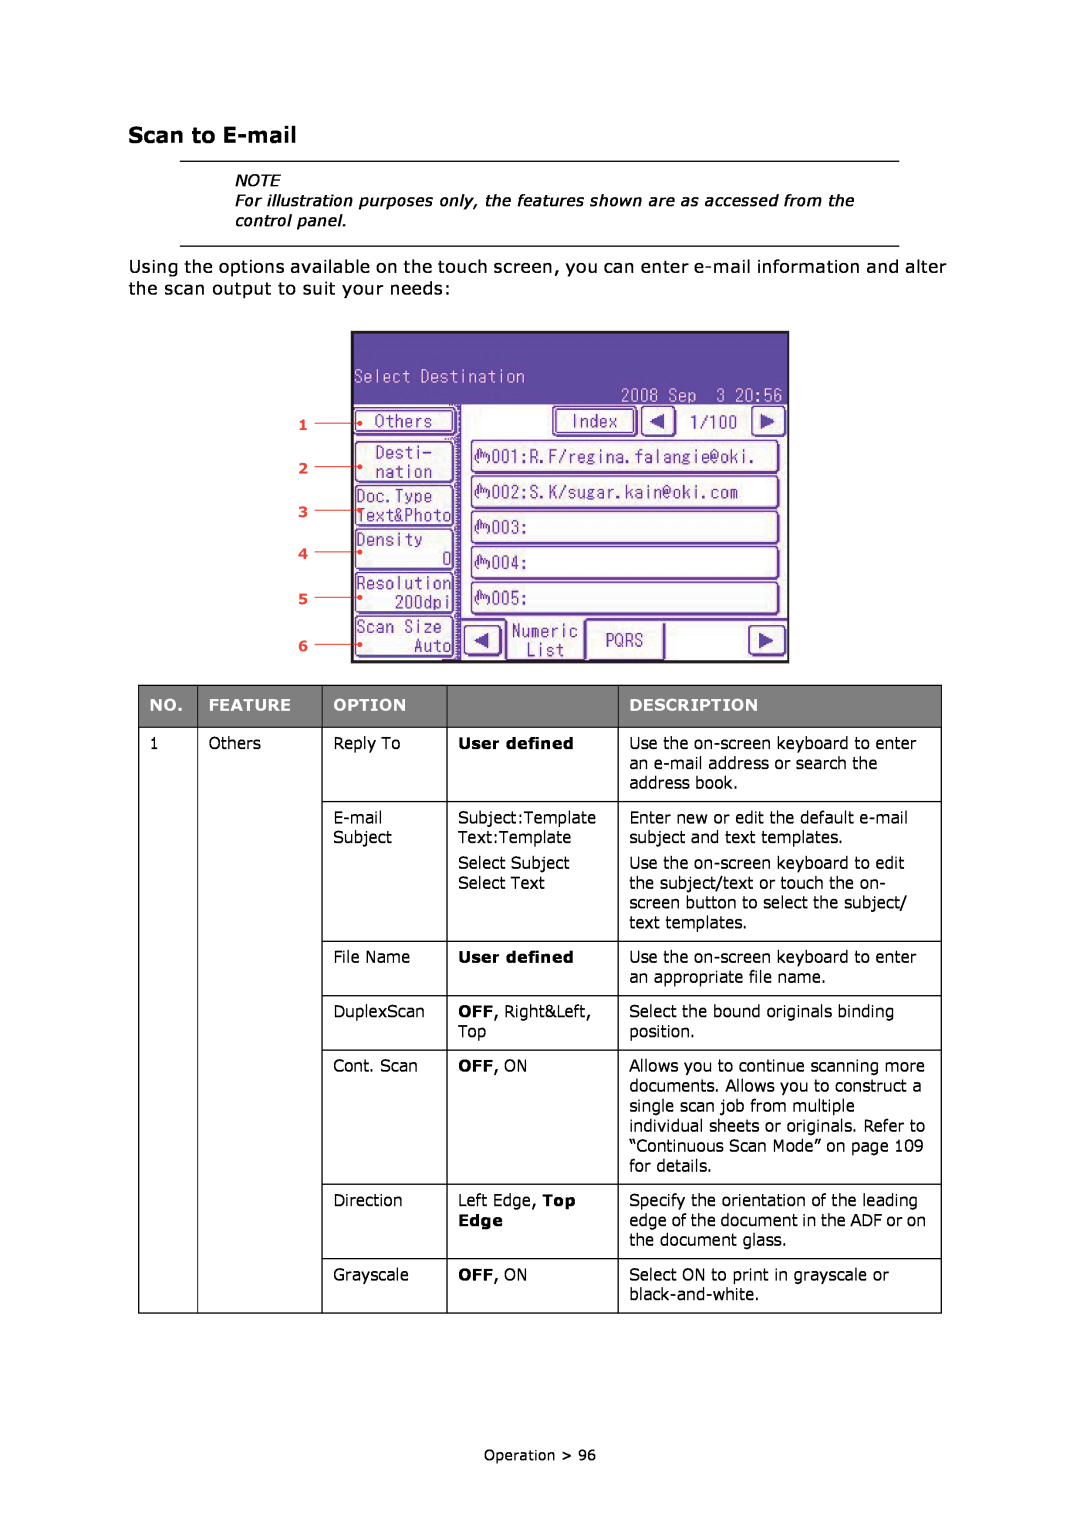 Oki MC860n MFP manual Scan to E-mail, Feature, Option, Description 